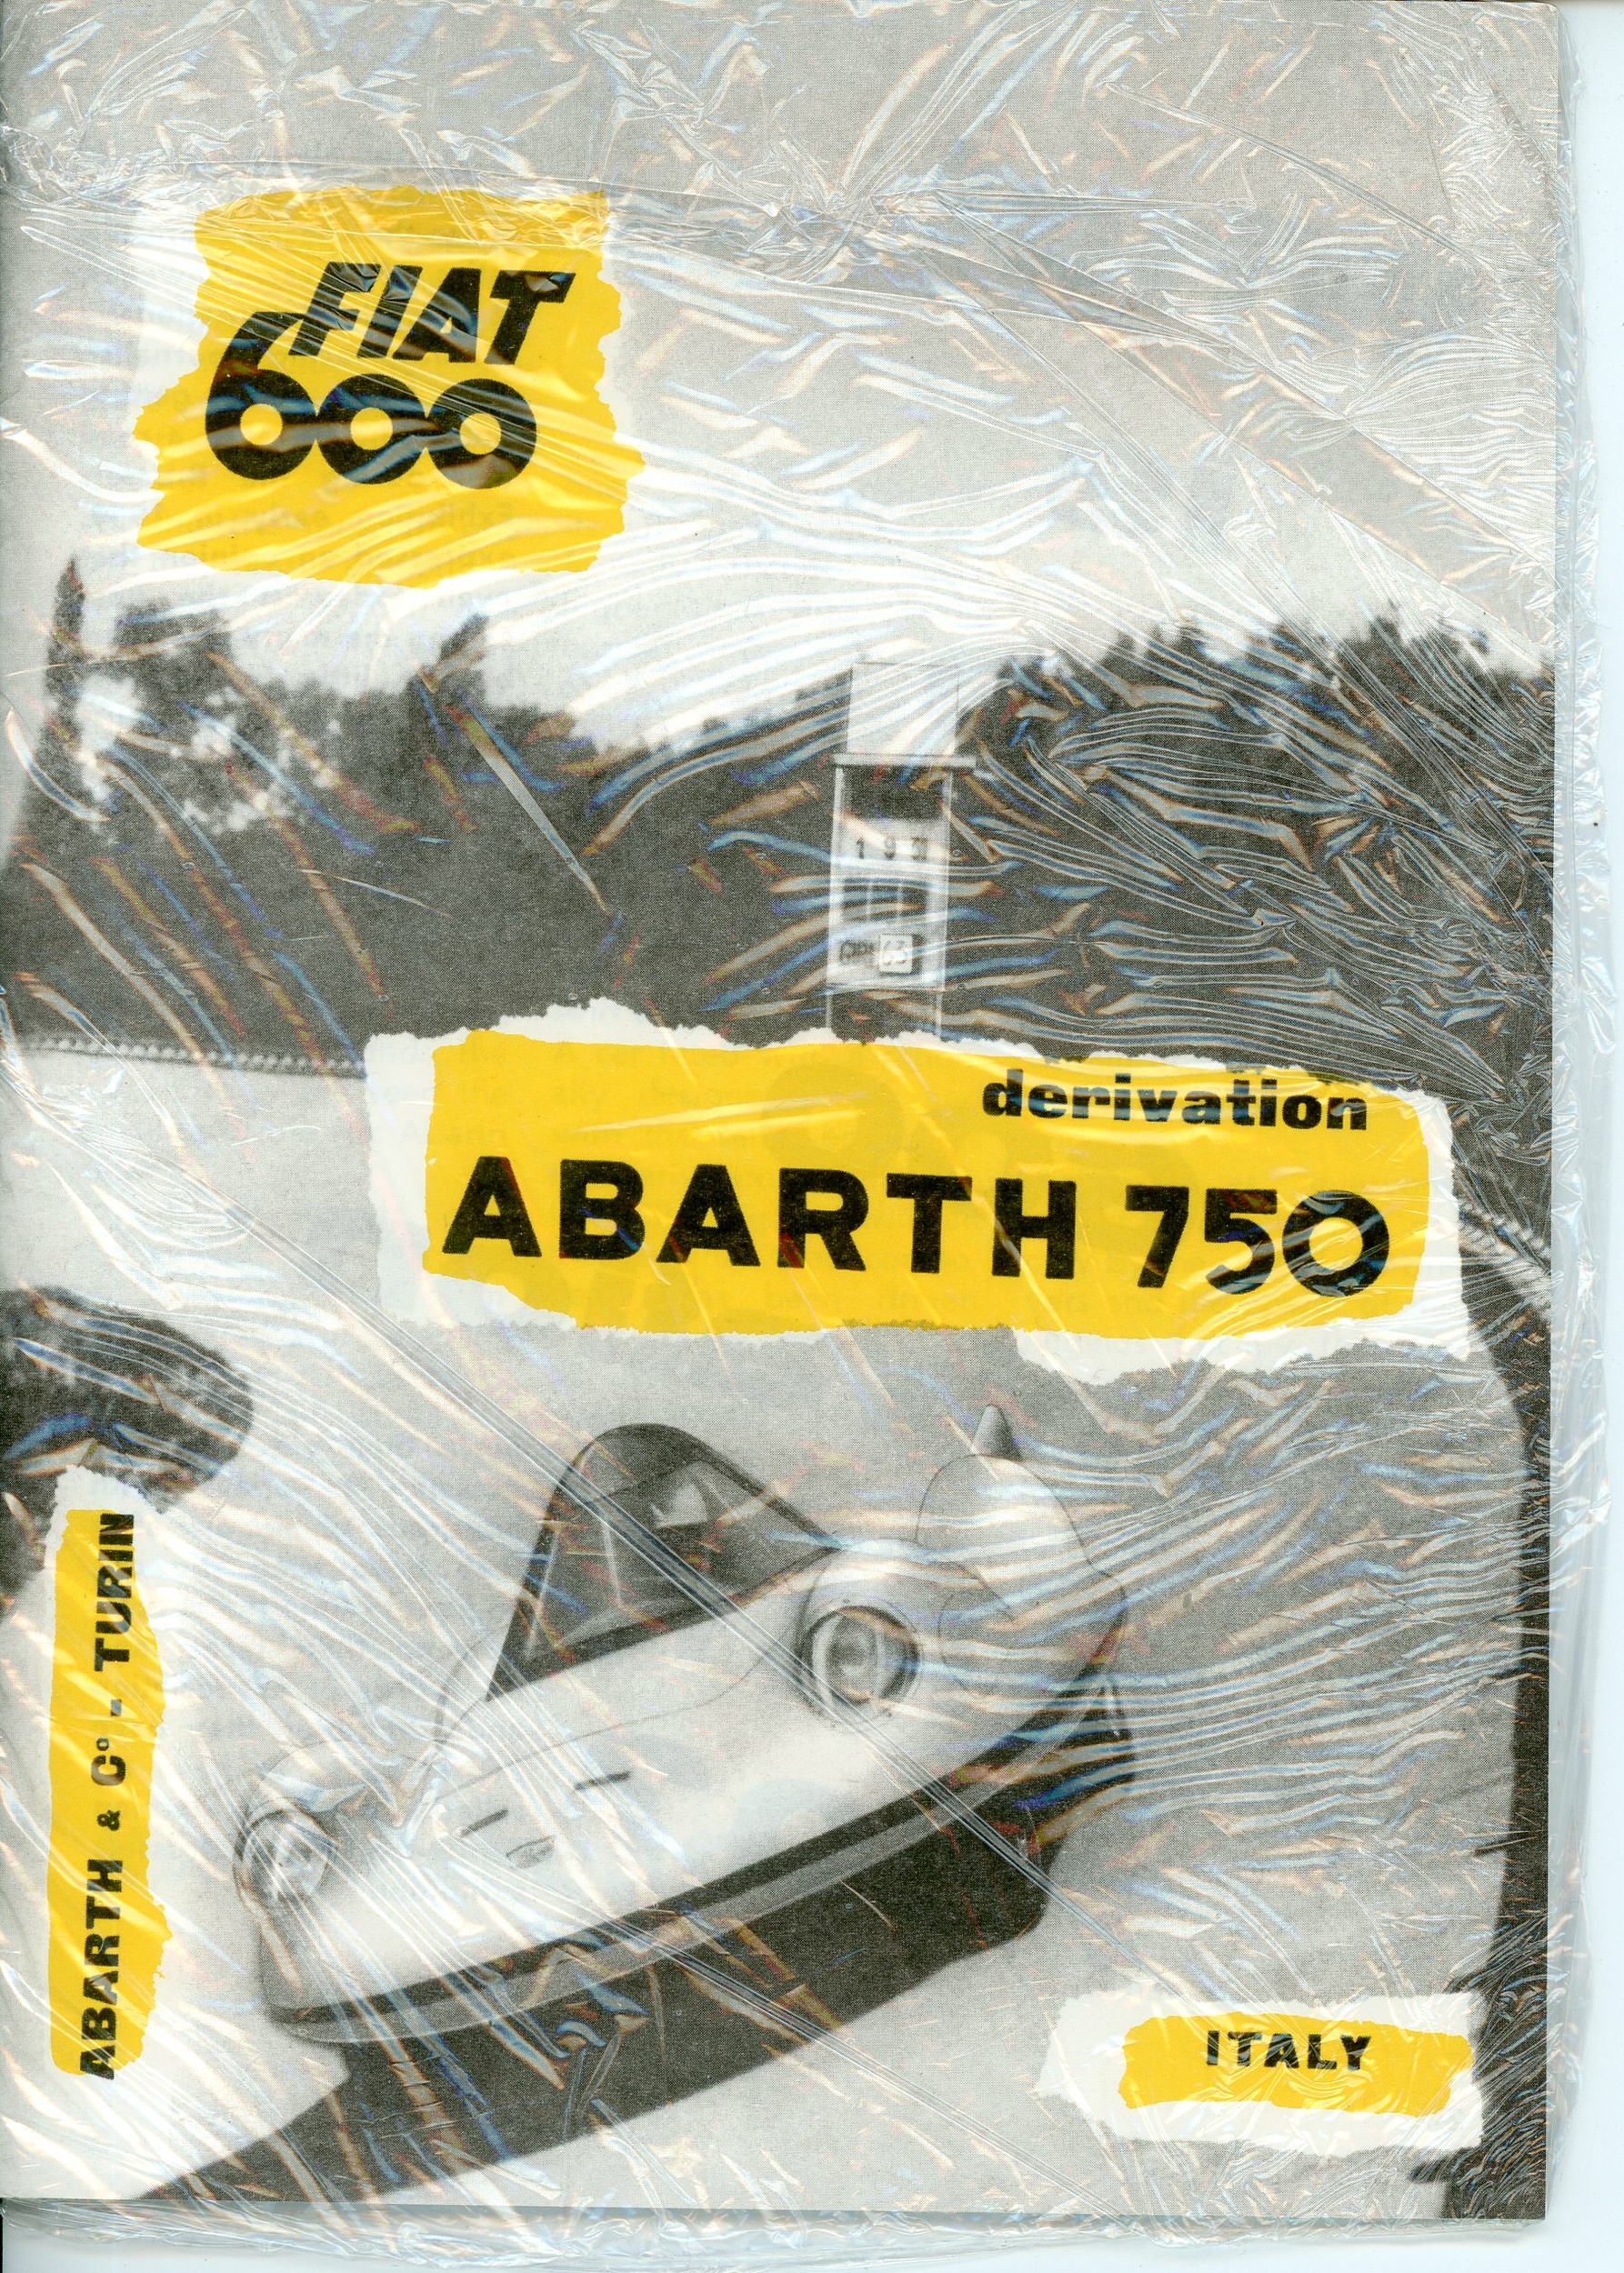 LIVRE-BROCHE-FIAT-600-DERIVATION-ABARTH-750-TURIN-LEMASTERBROCKERS-COM